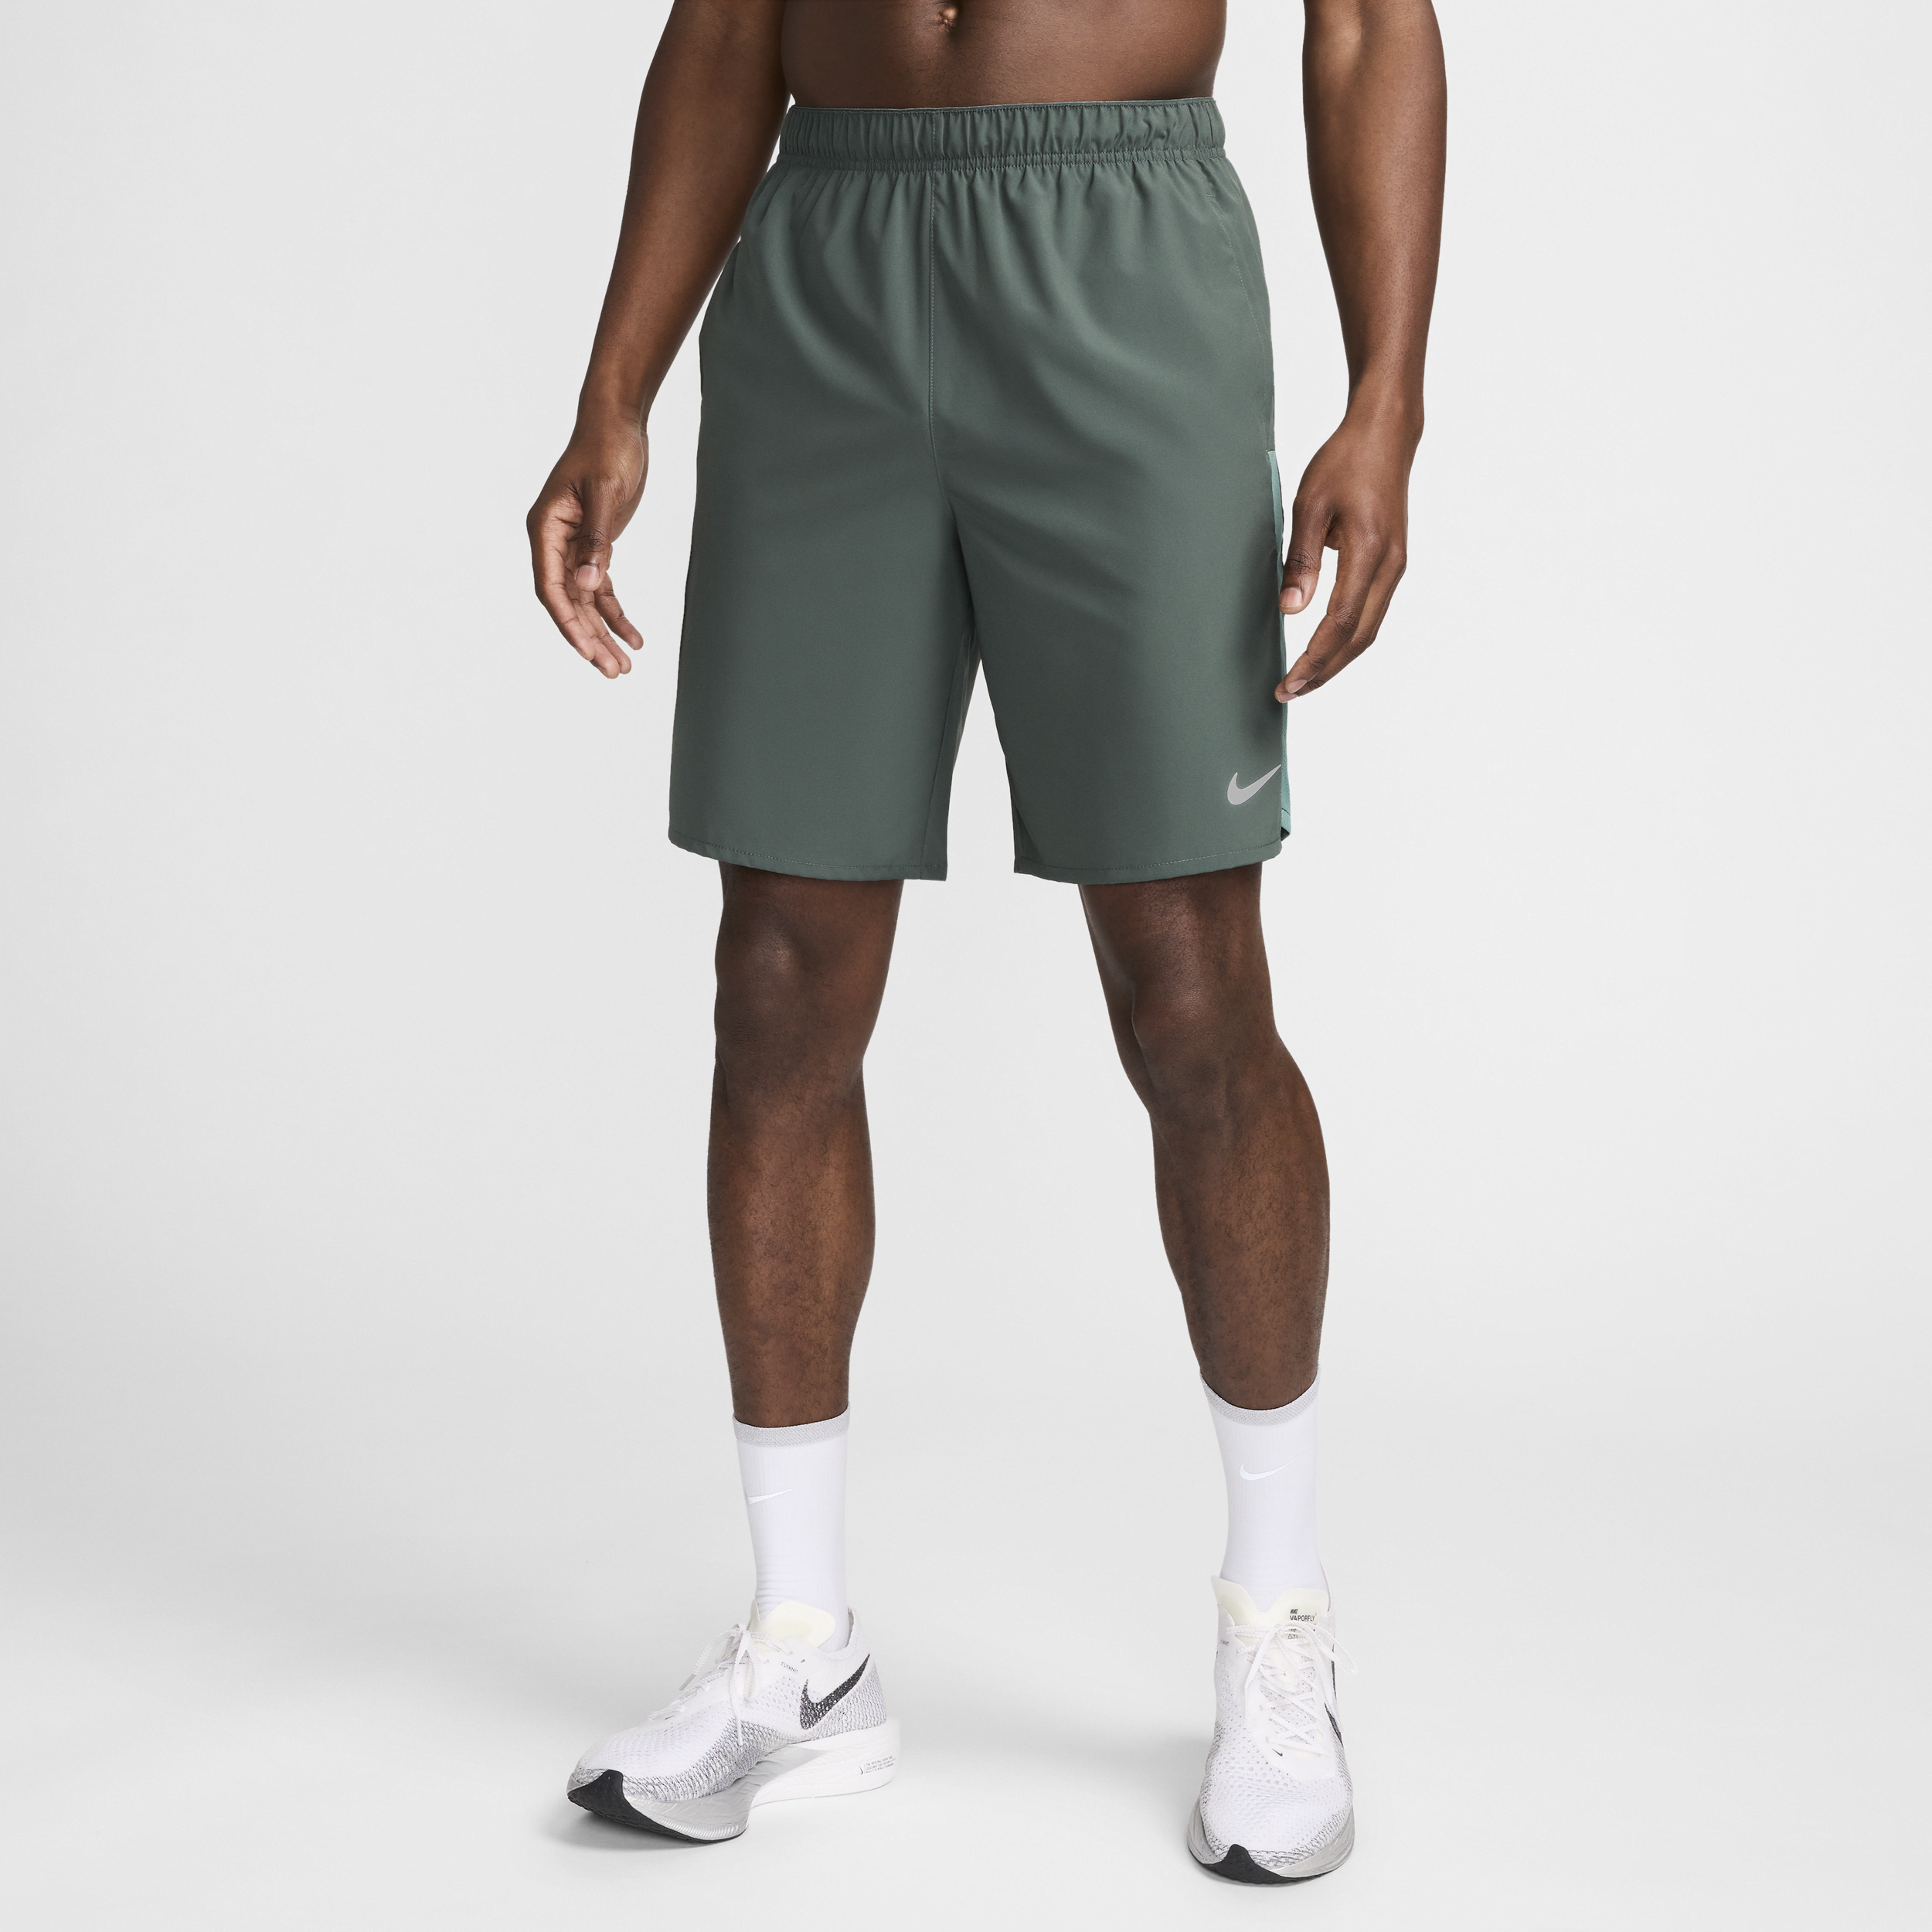 Shorts versatili non foderati Dri-FIT 23 cm Nike Challenger – Uomo - Verde